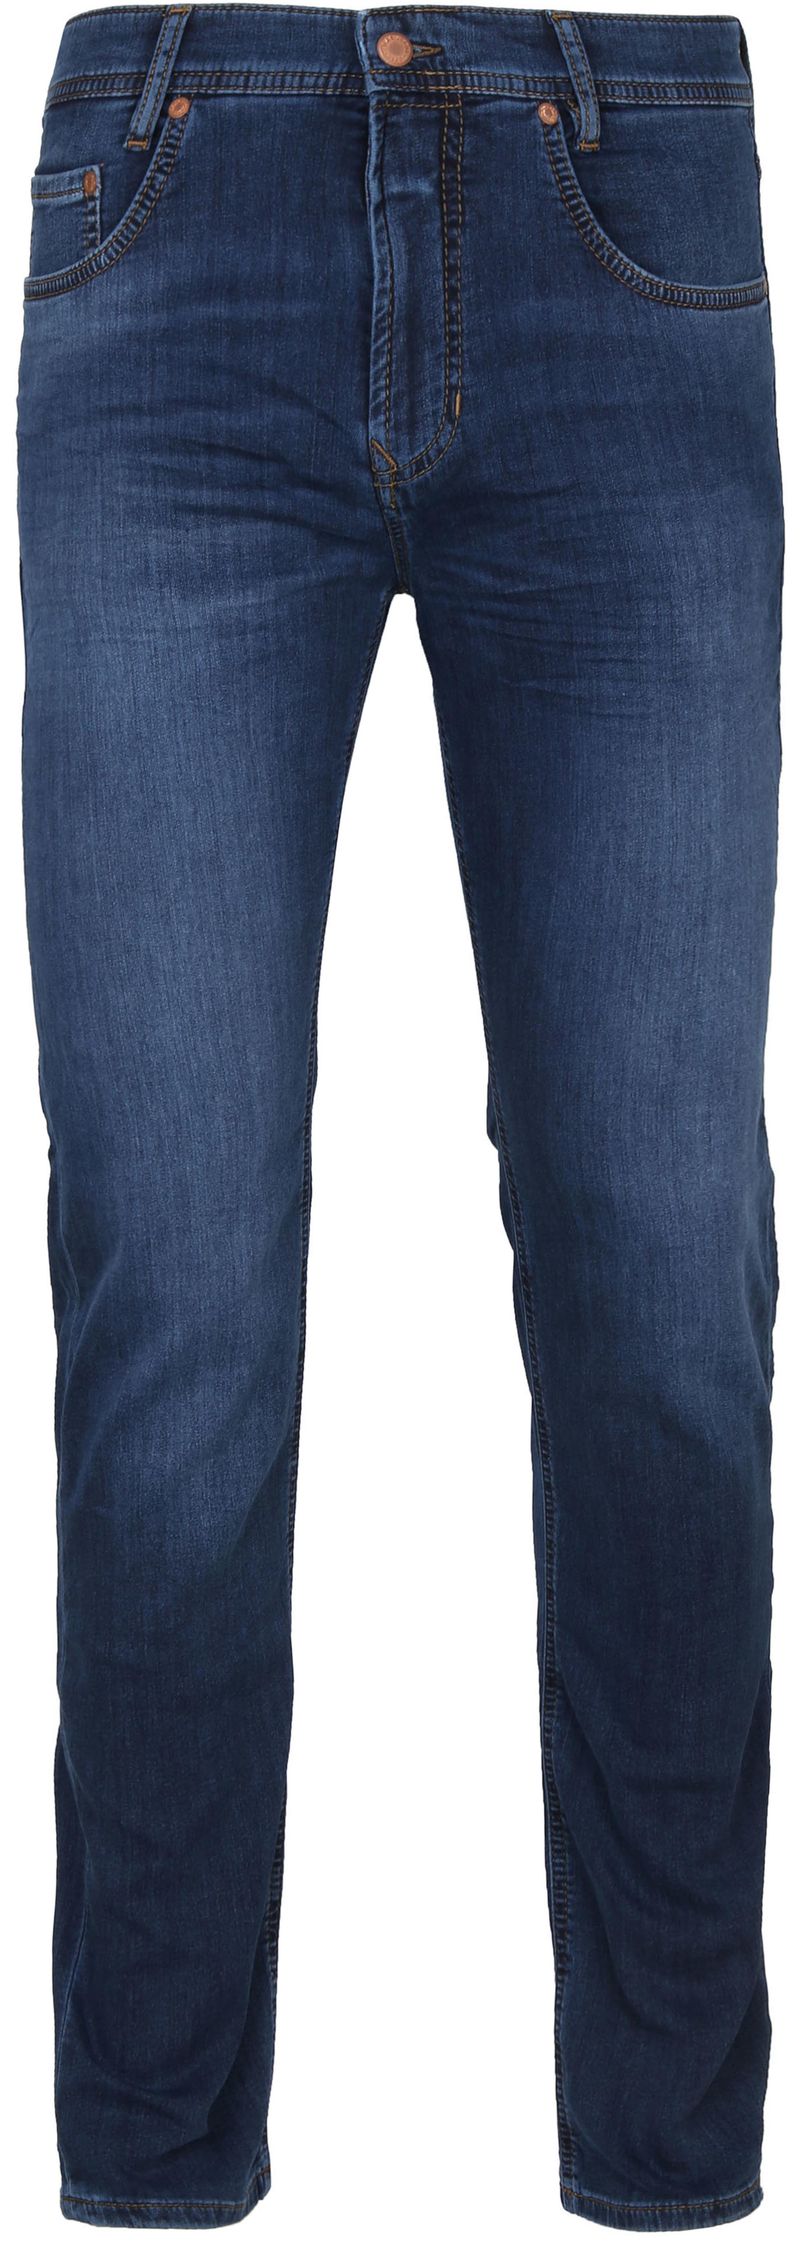 Mac Jog'n Jeans Blauw product